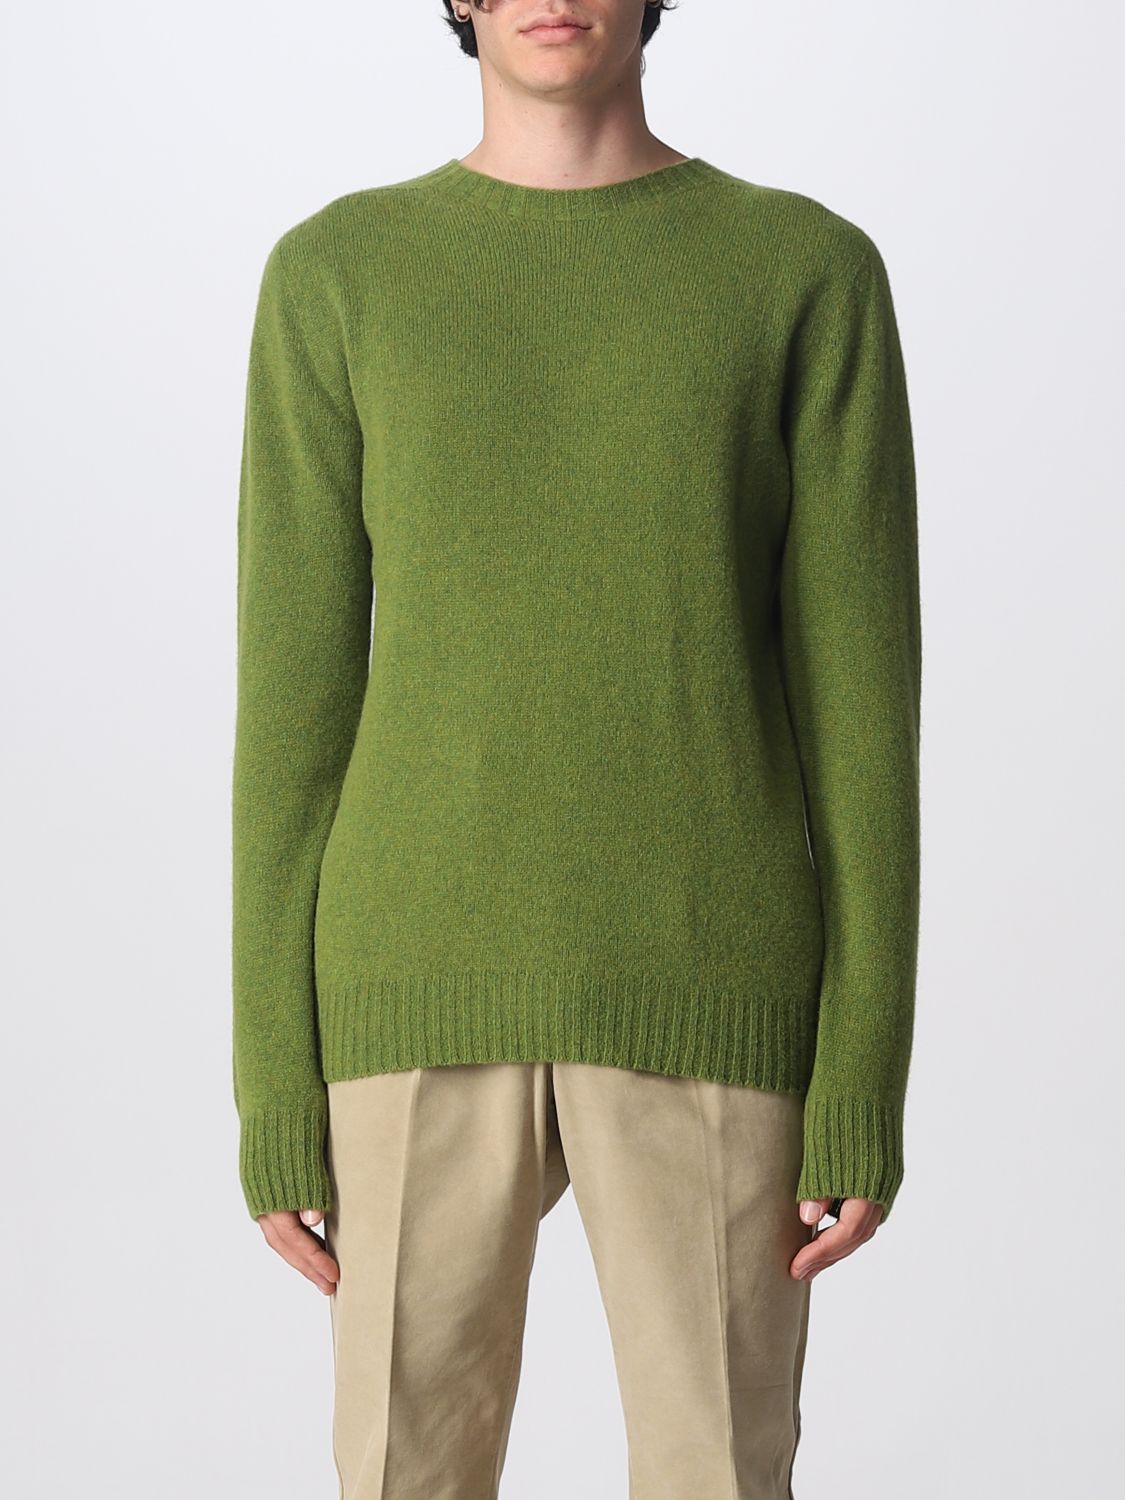 ALTEA: sweater for man - Pistachio | Altea sweater 2261005 online on ...